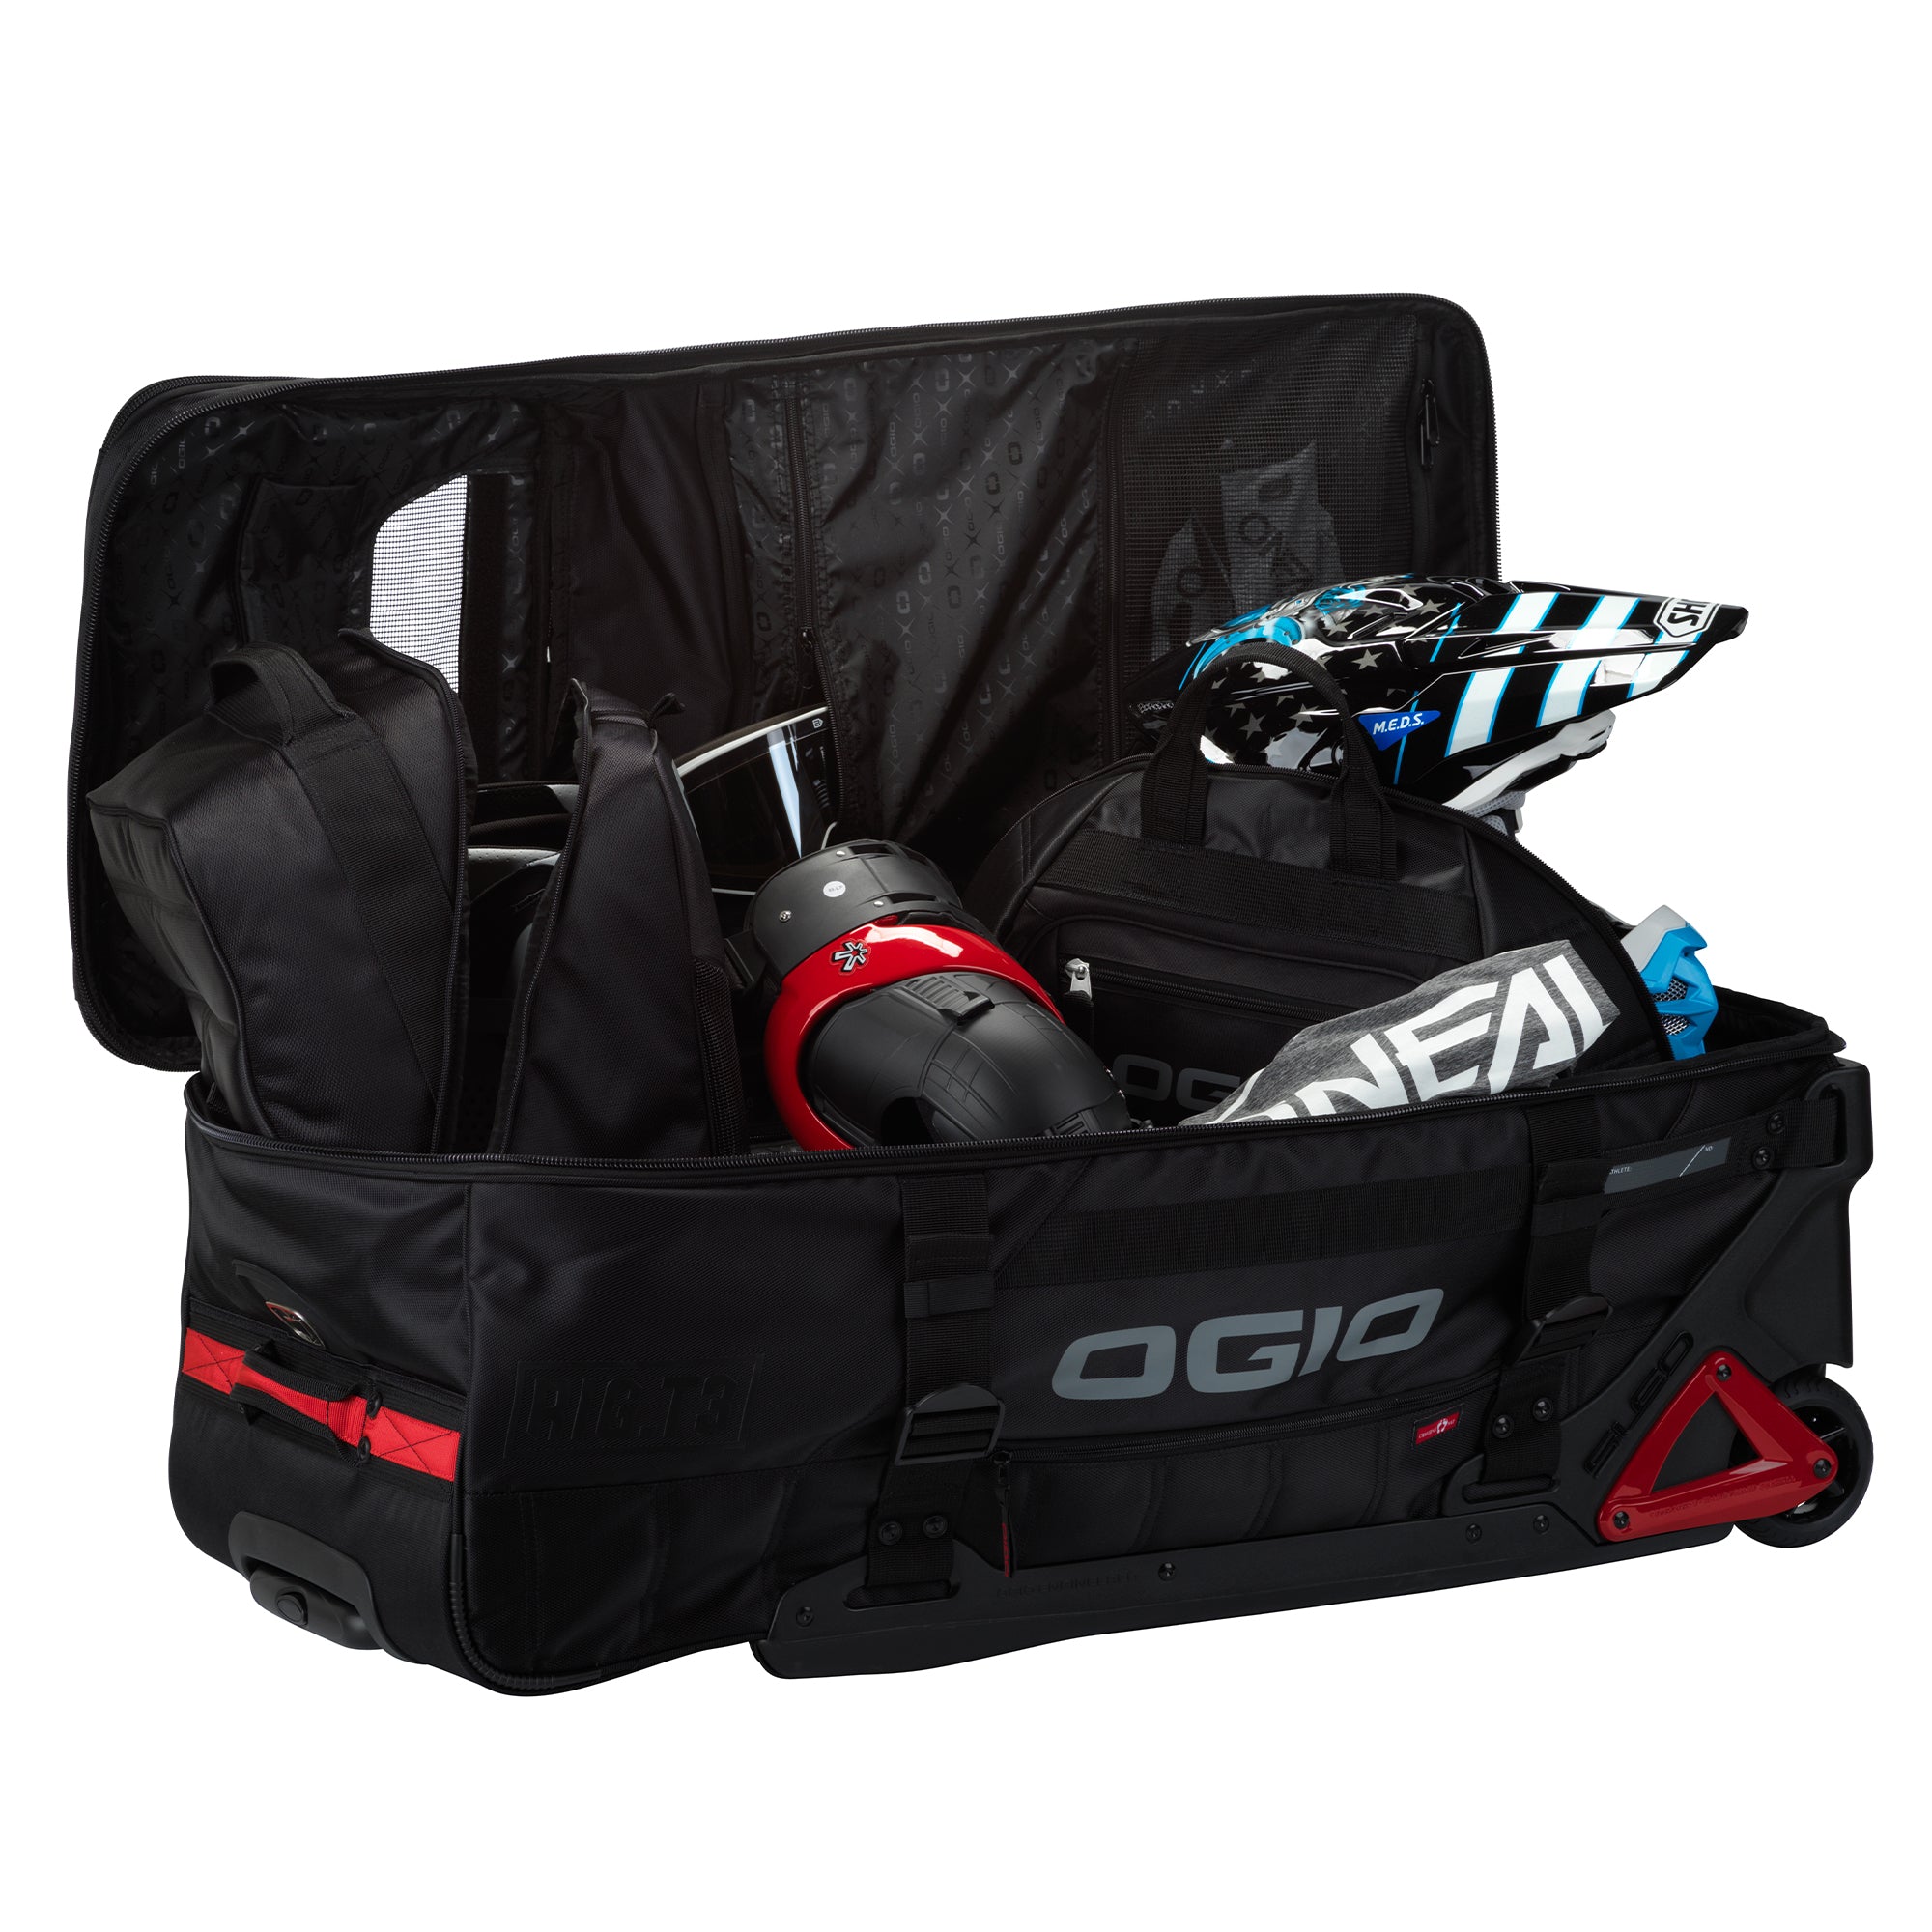 Ogio 9800 gear bag with motocross gear inside